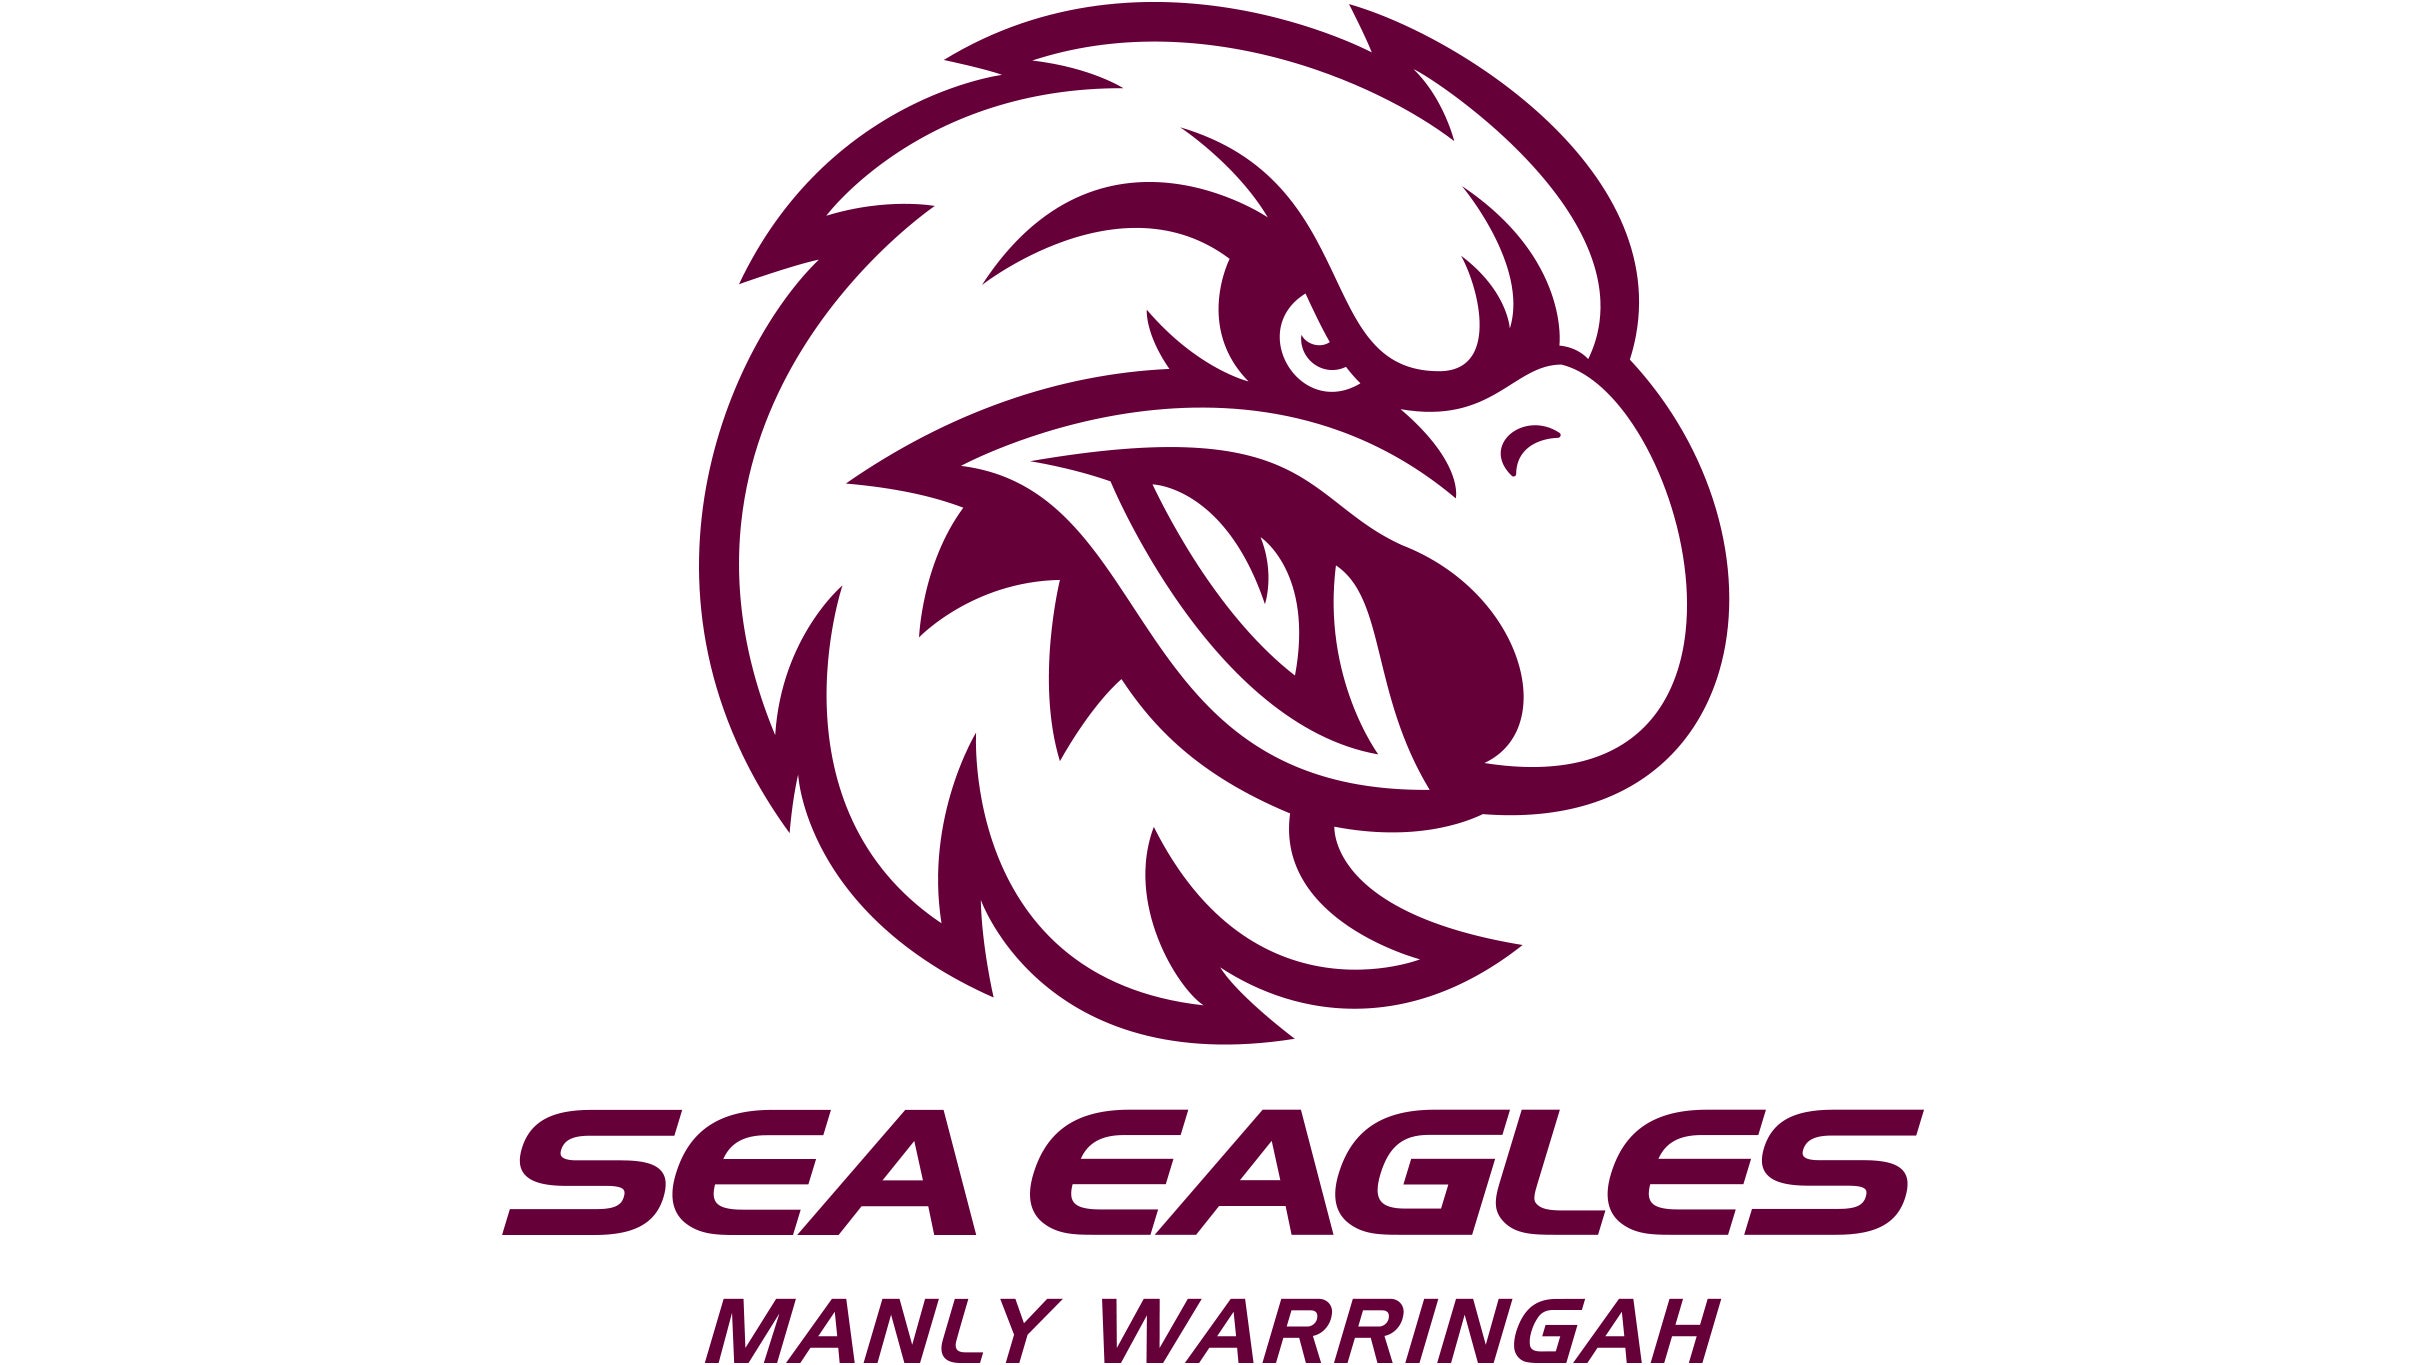 Manly Warringah Sea Eagles v Raiders in Brookvale promo photo for Sea Eagles Member presale offer code